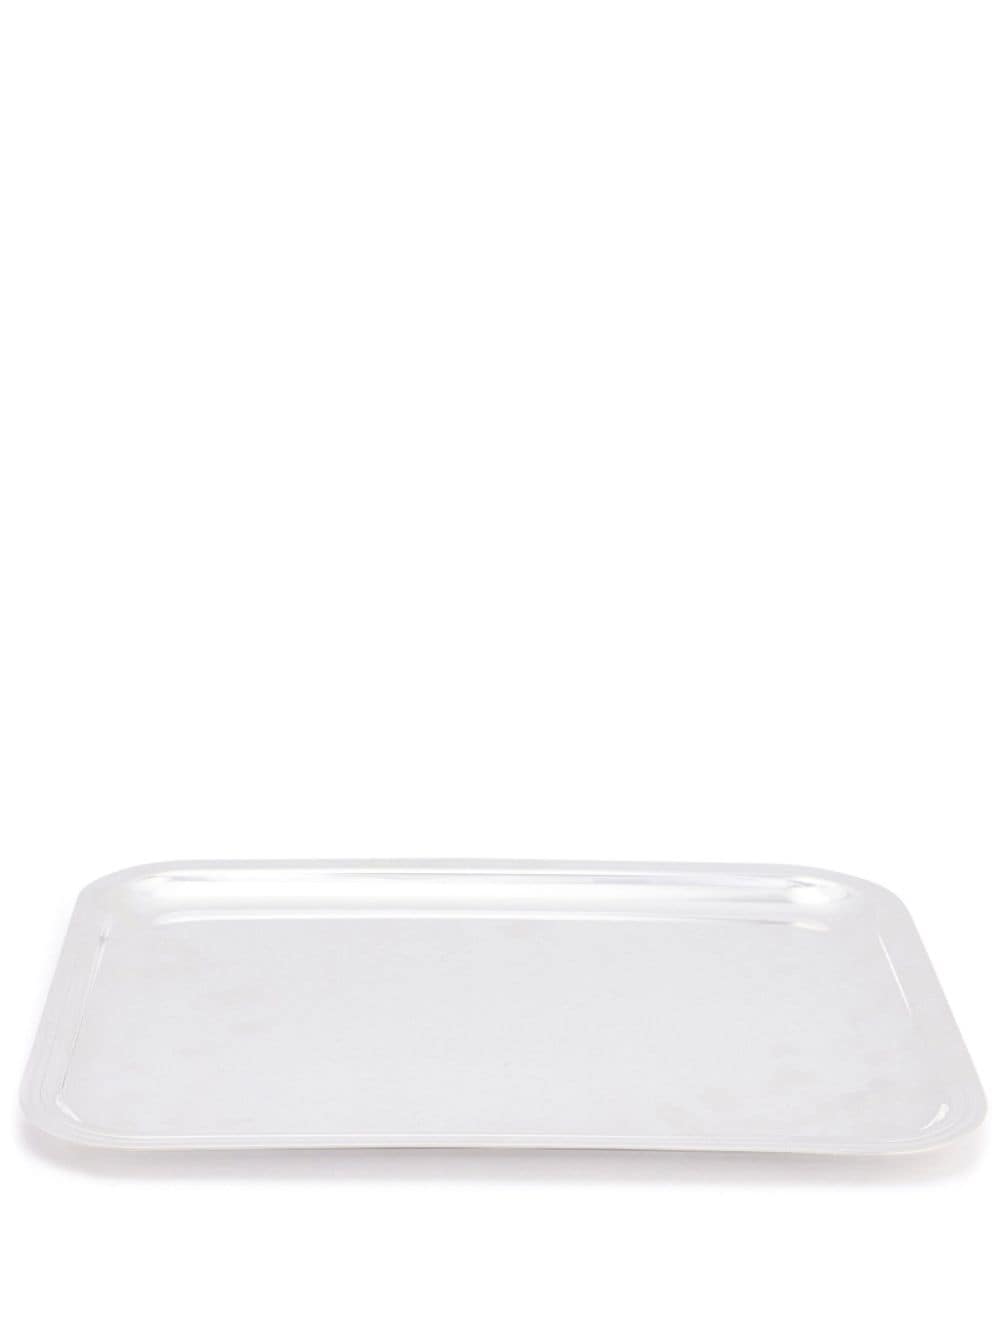 Christofle Albi silver-plated rectangular tray - White von Christofle